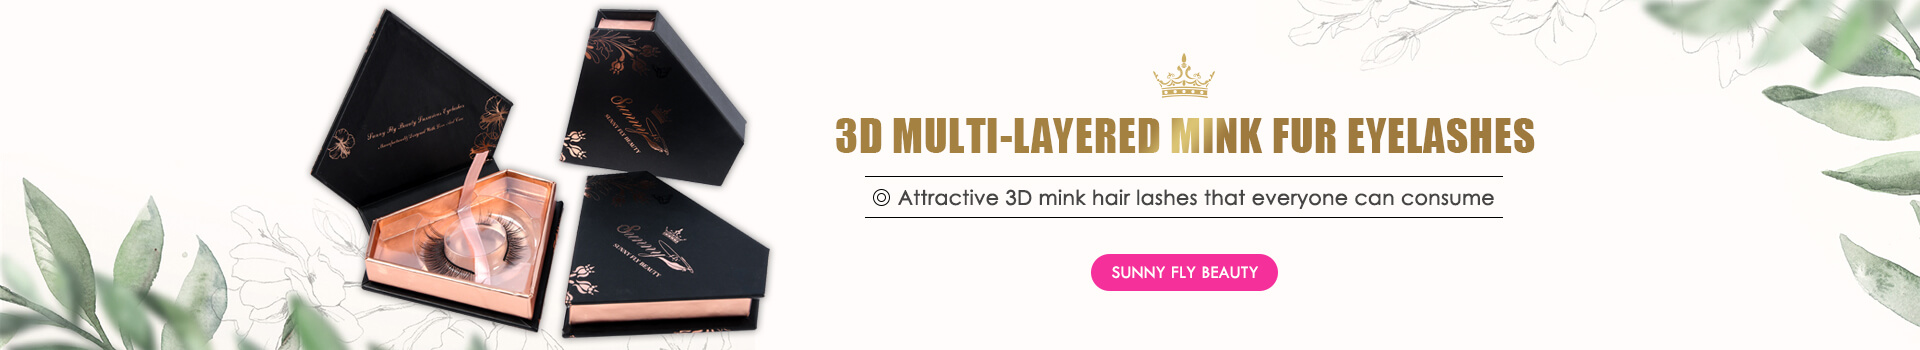 3D Multi-layered Mink Fur Eyelashes MG09